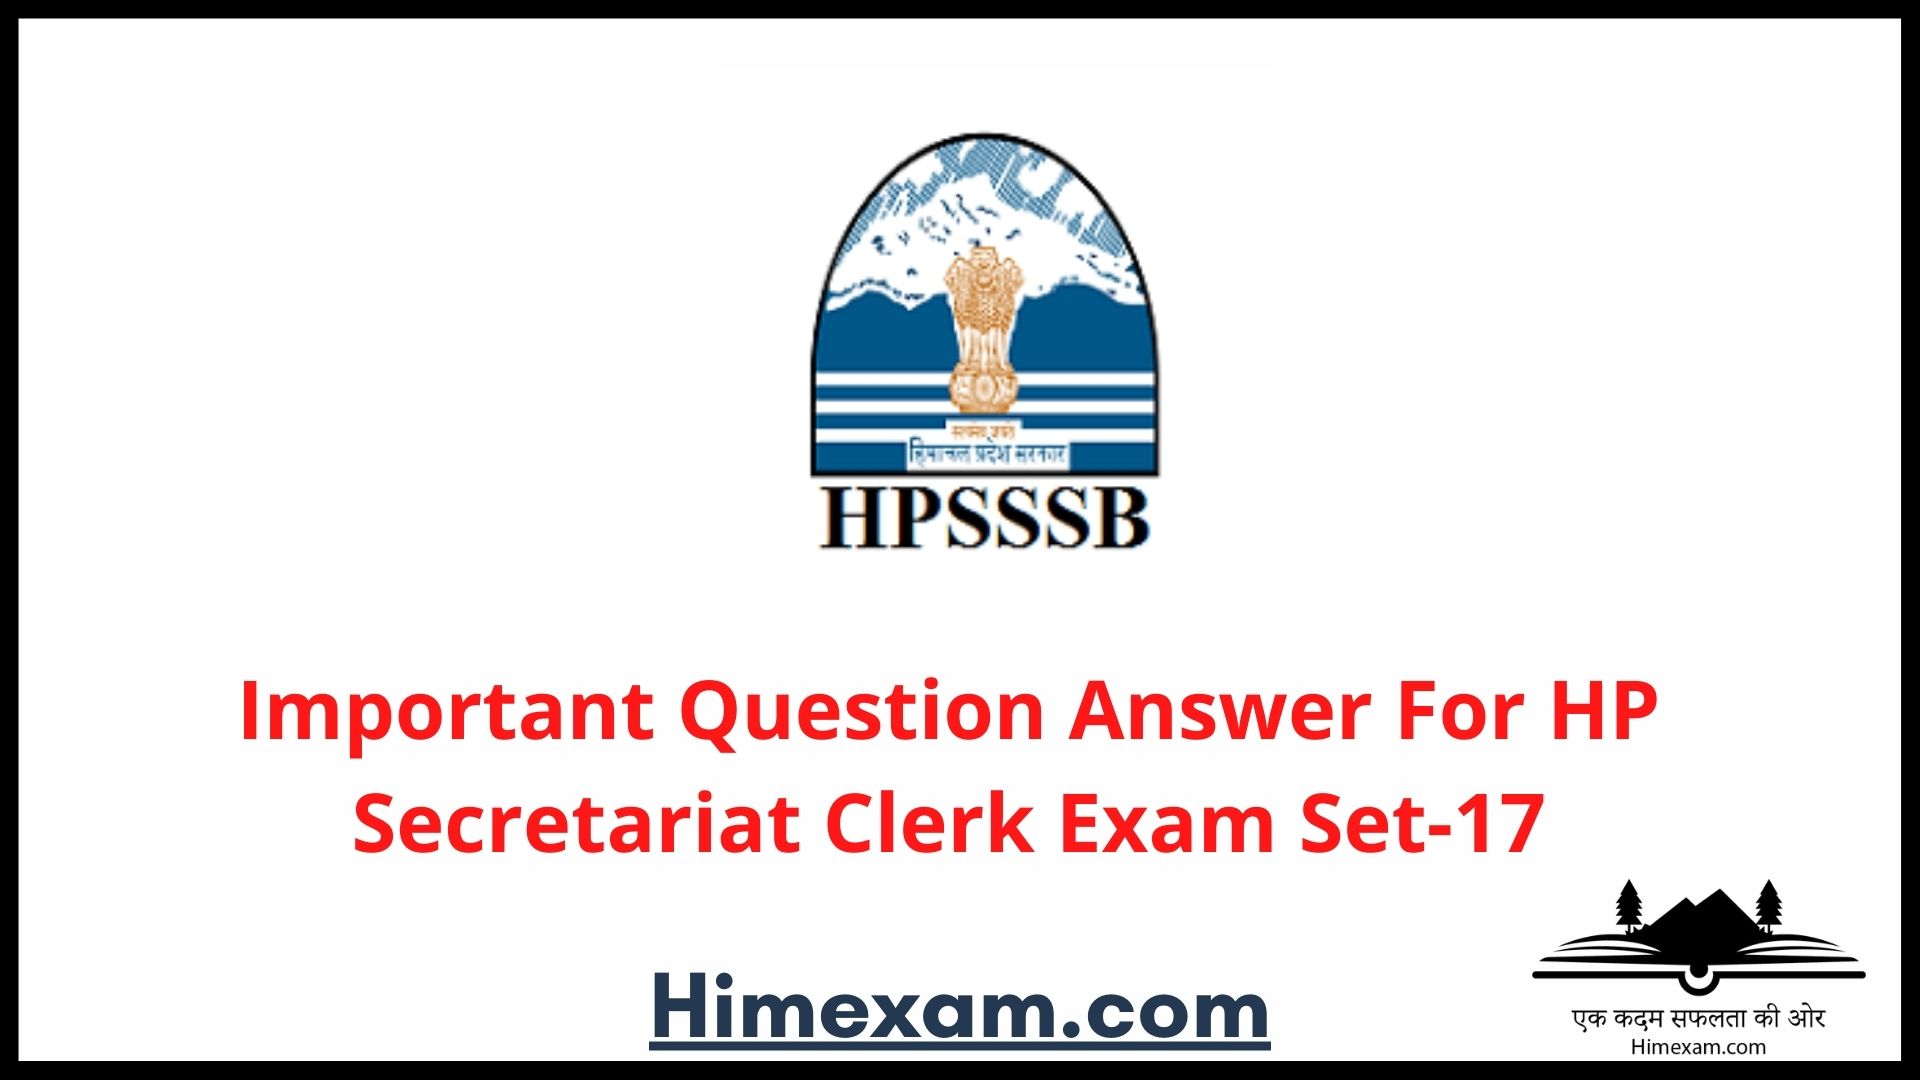 Important Question Answer For HP Secretariat Clerk Exam Set-17